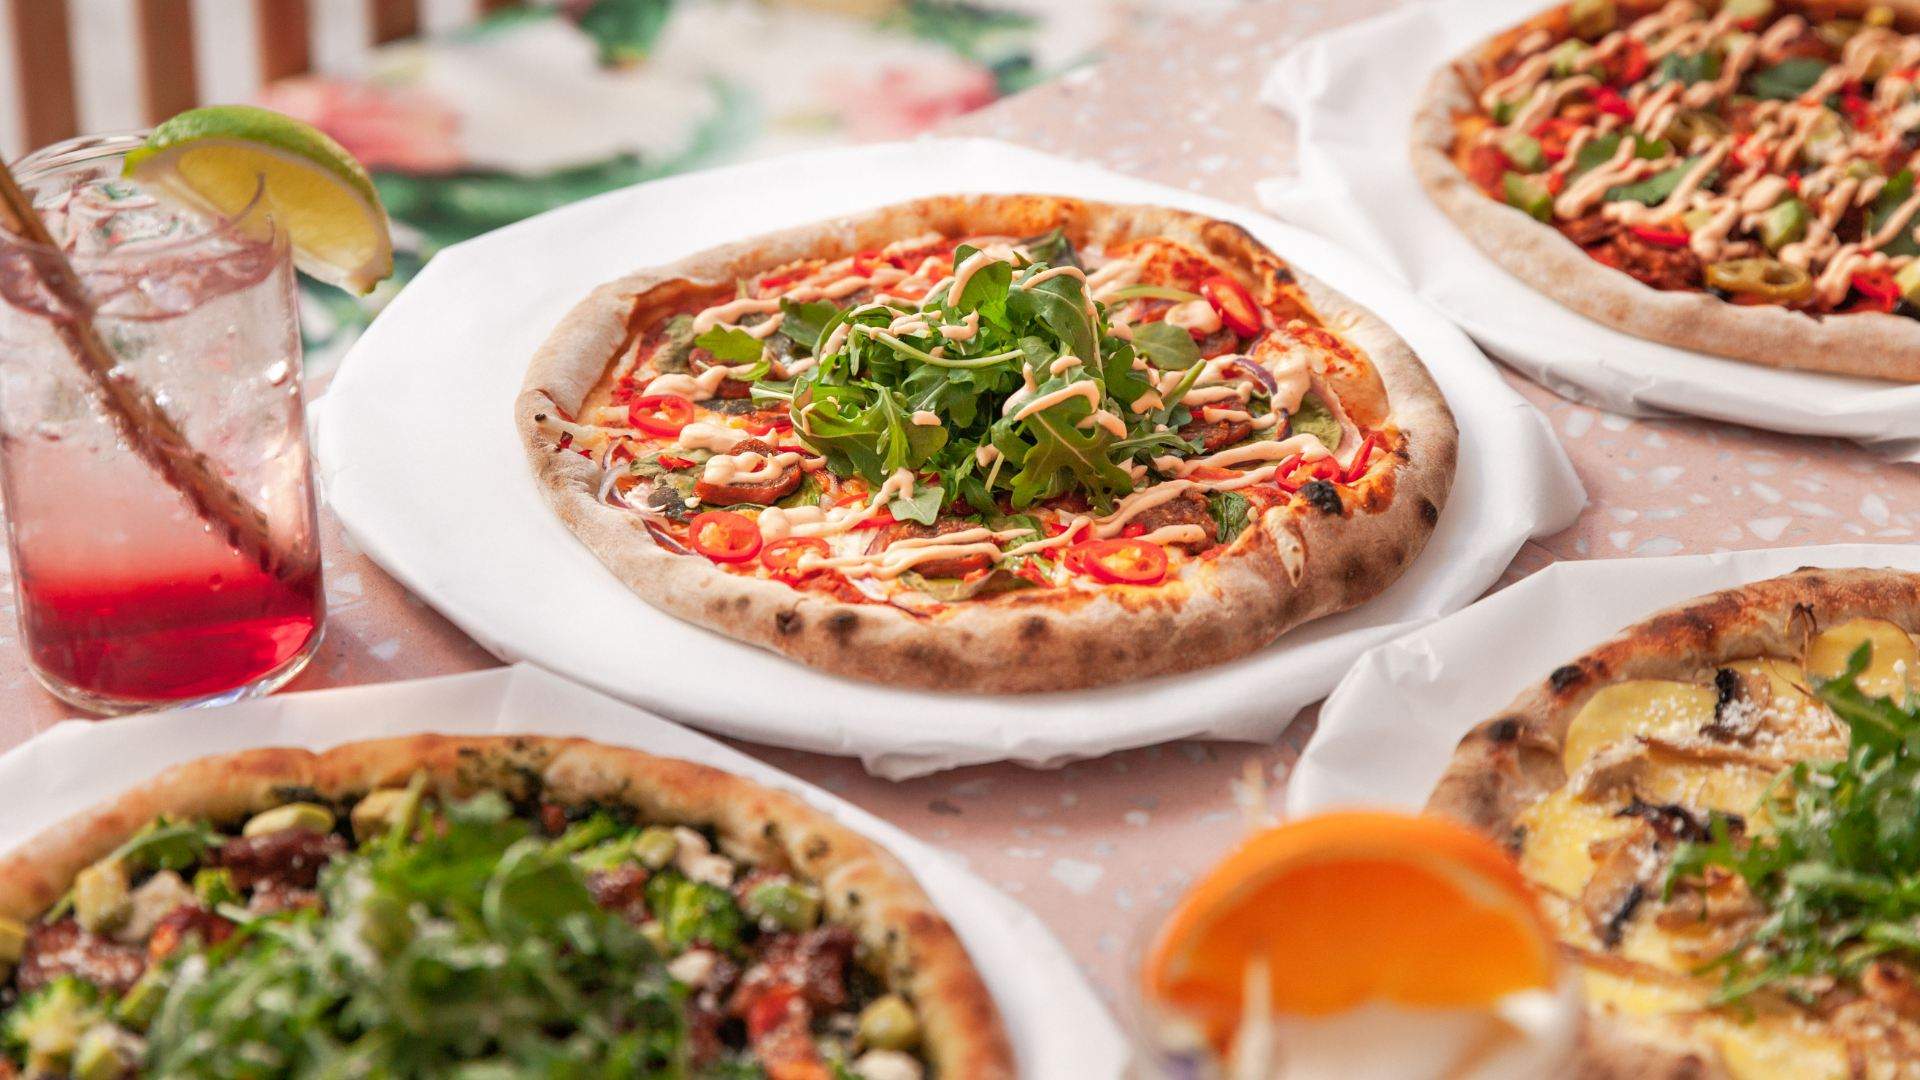 vegan pizzas and cocktails on a table at Sydney's Eden Bondi restaurant